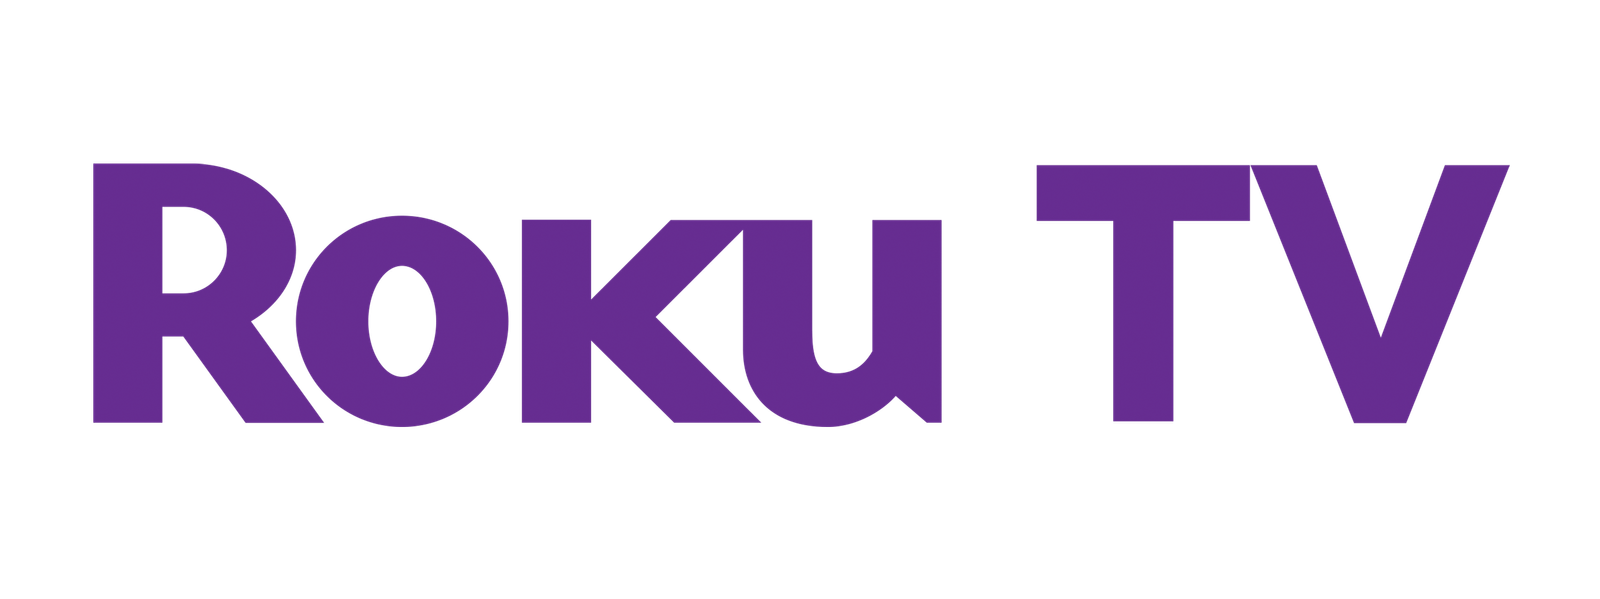 Roku-tv